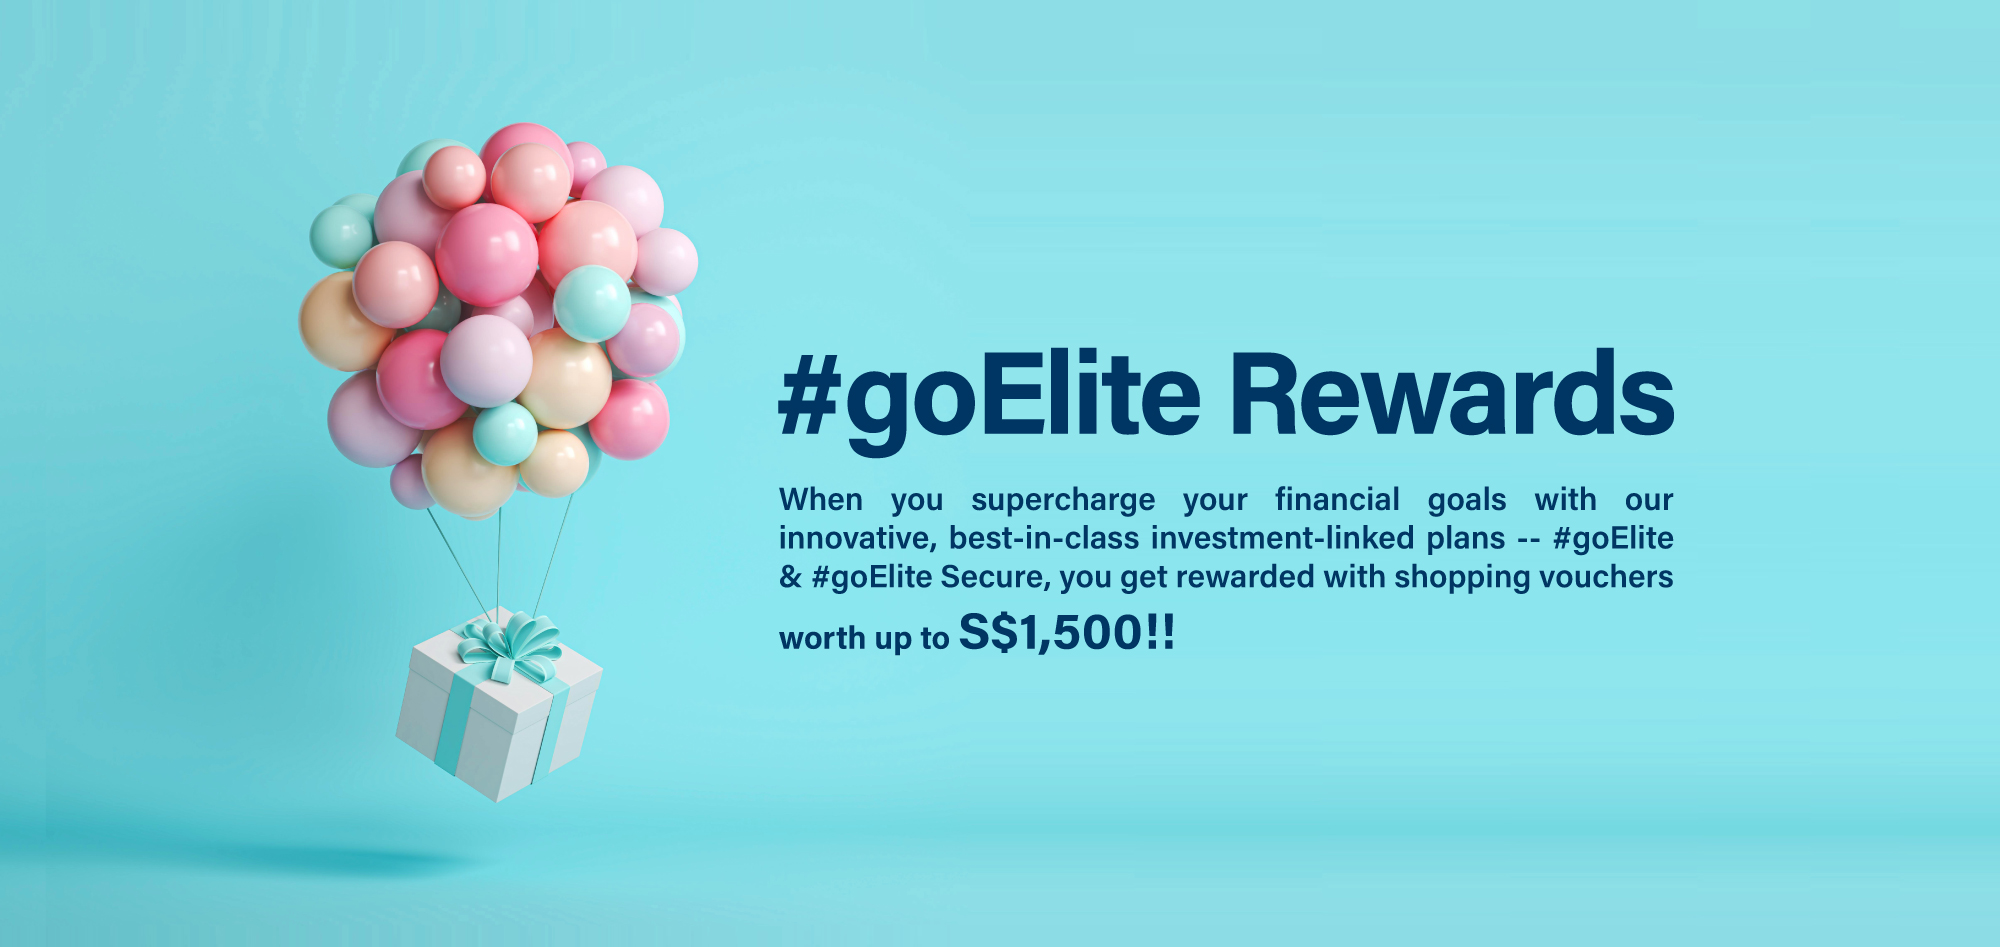 Carousel 3 - #goElite Rewards